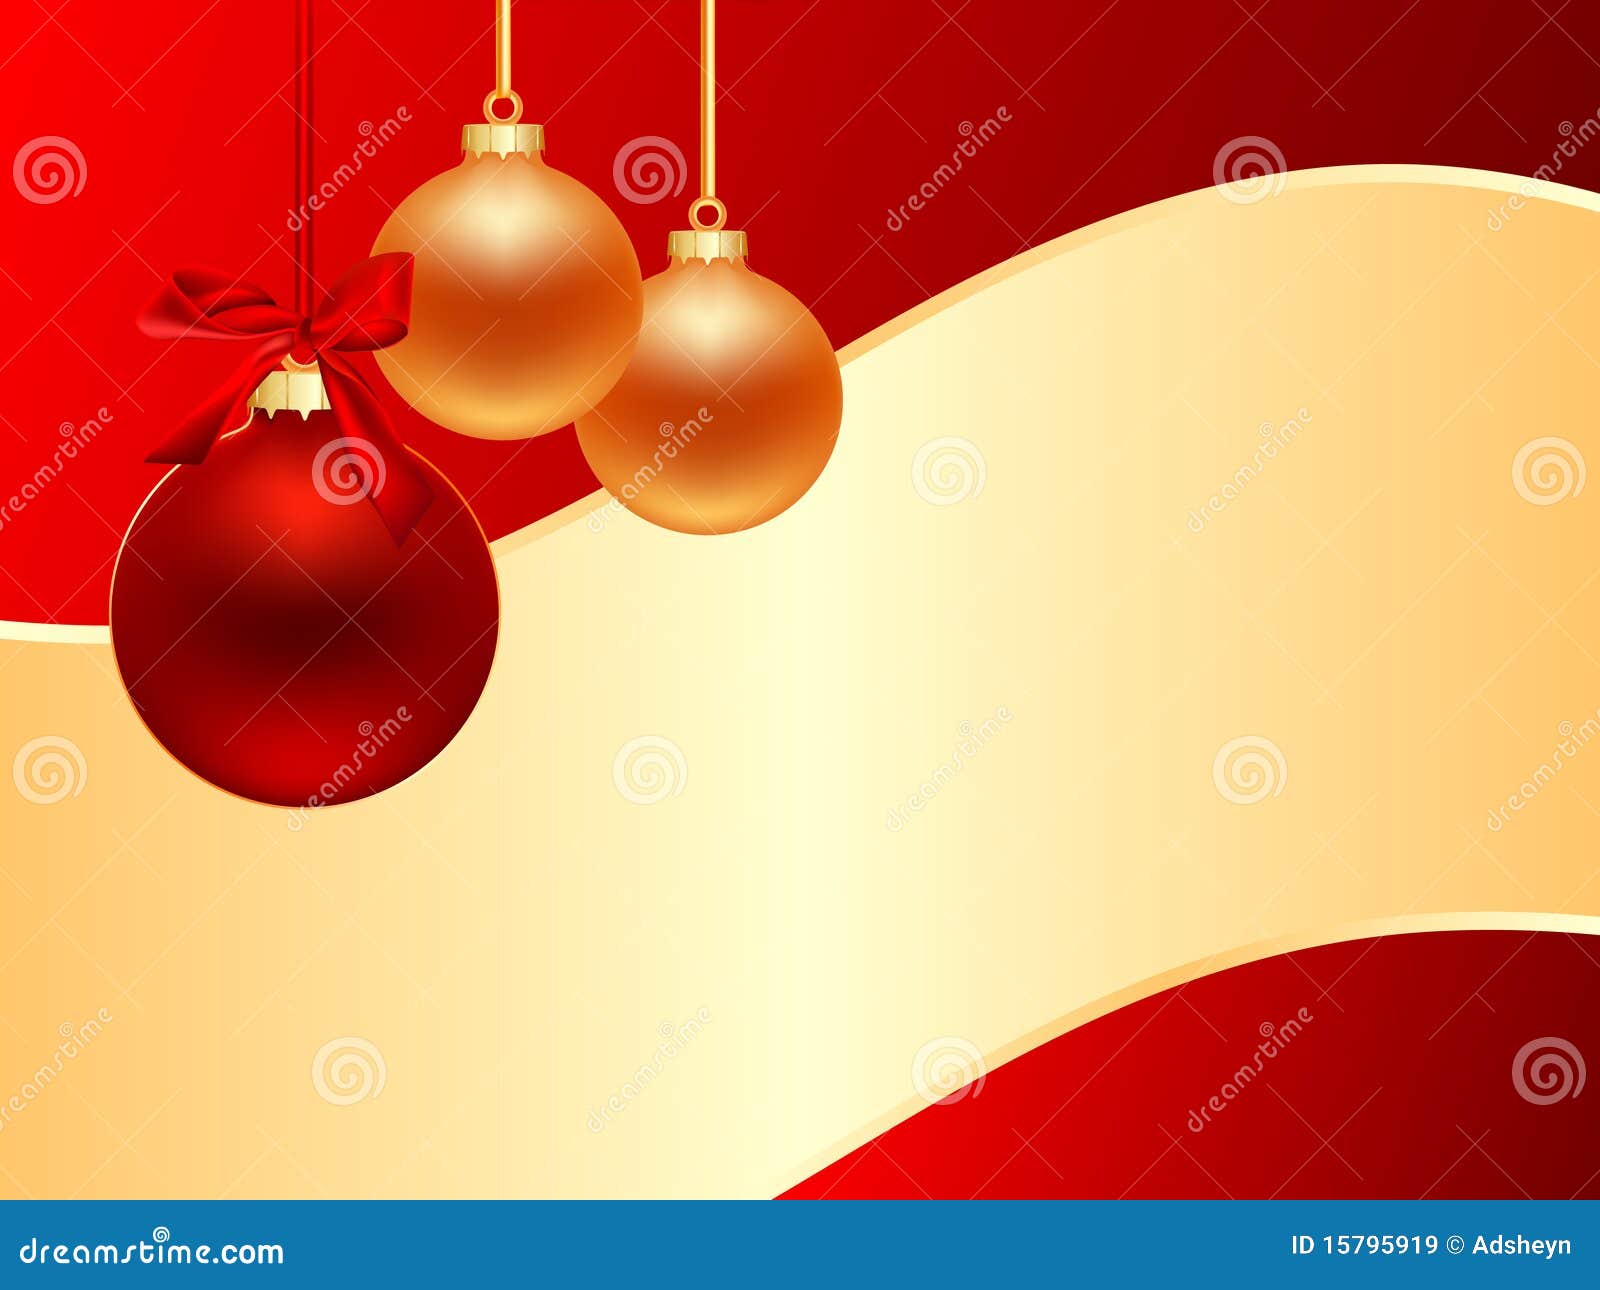 Horizontal christmas card stock illustration. Illustration of decorate ...